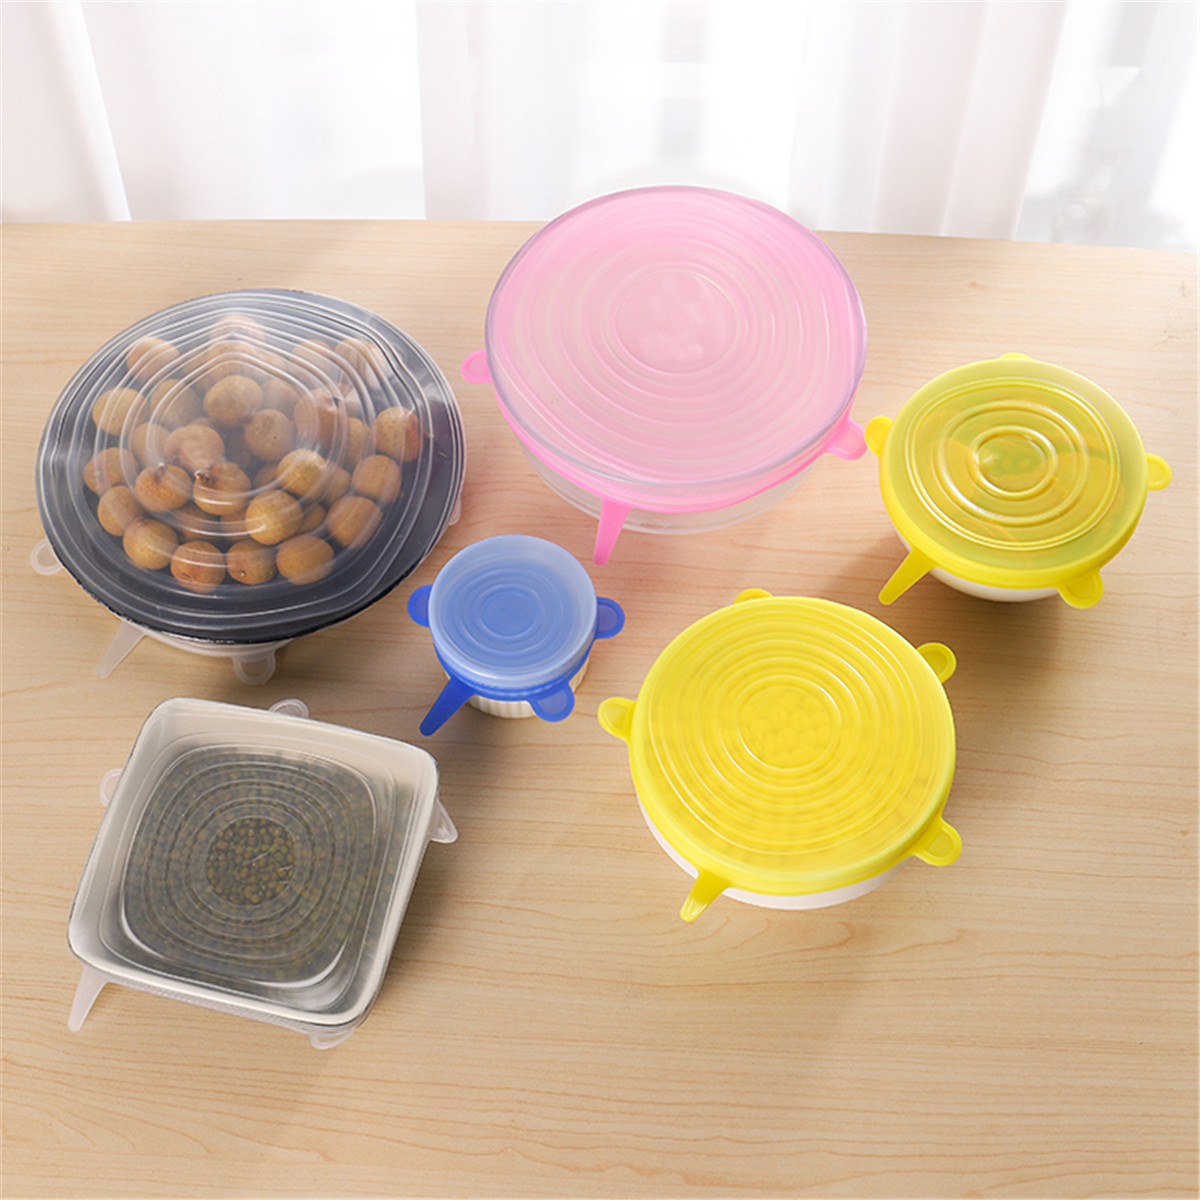 

6Pcs Stretch Silicone Kitchen Food Bowl Container Cover Storage Wraps Seals Reusable Lids